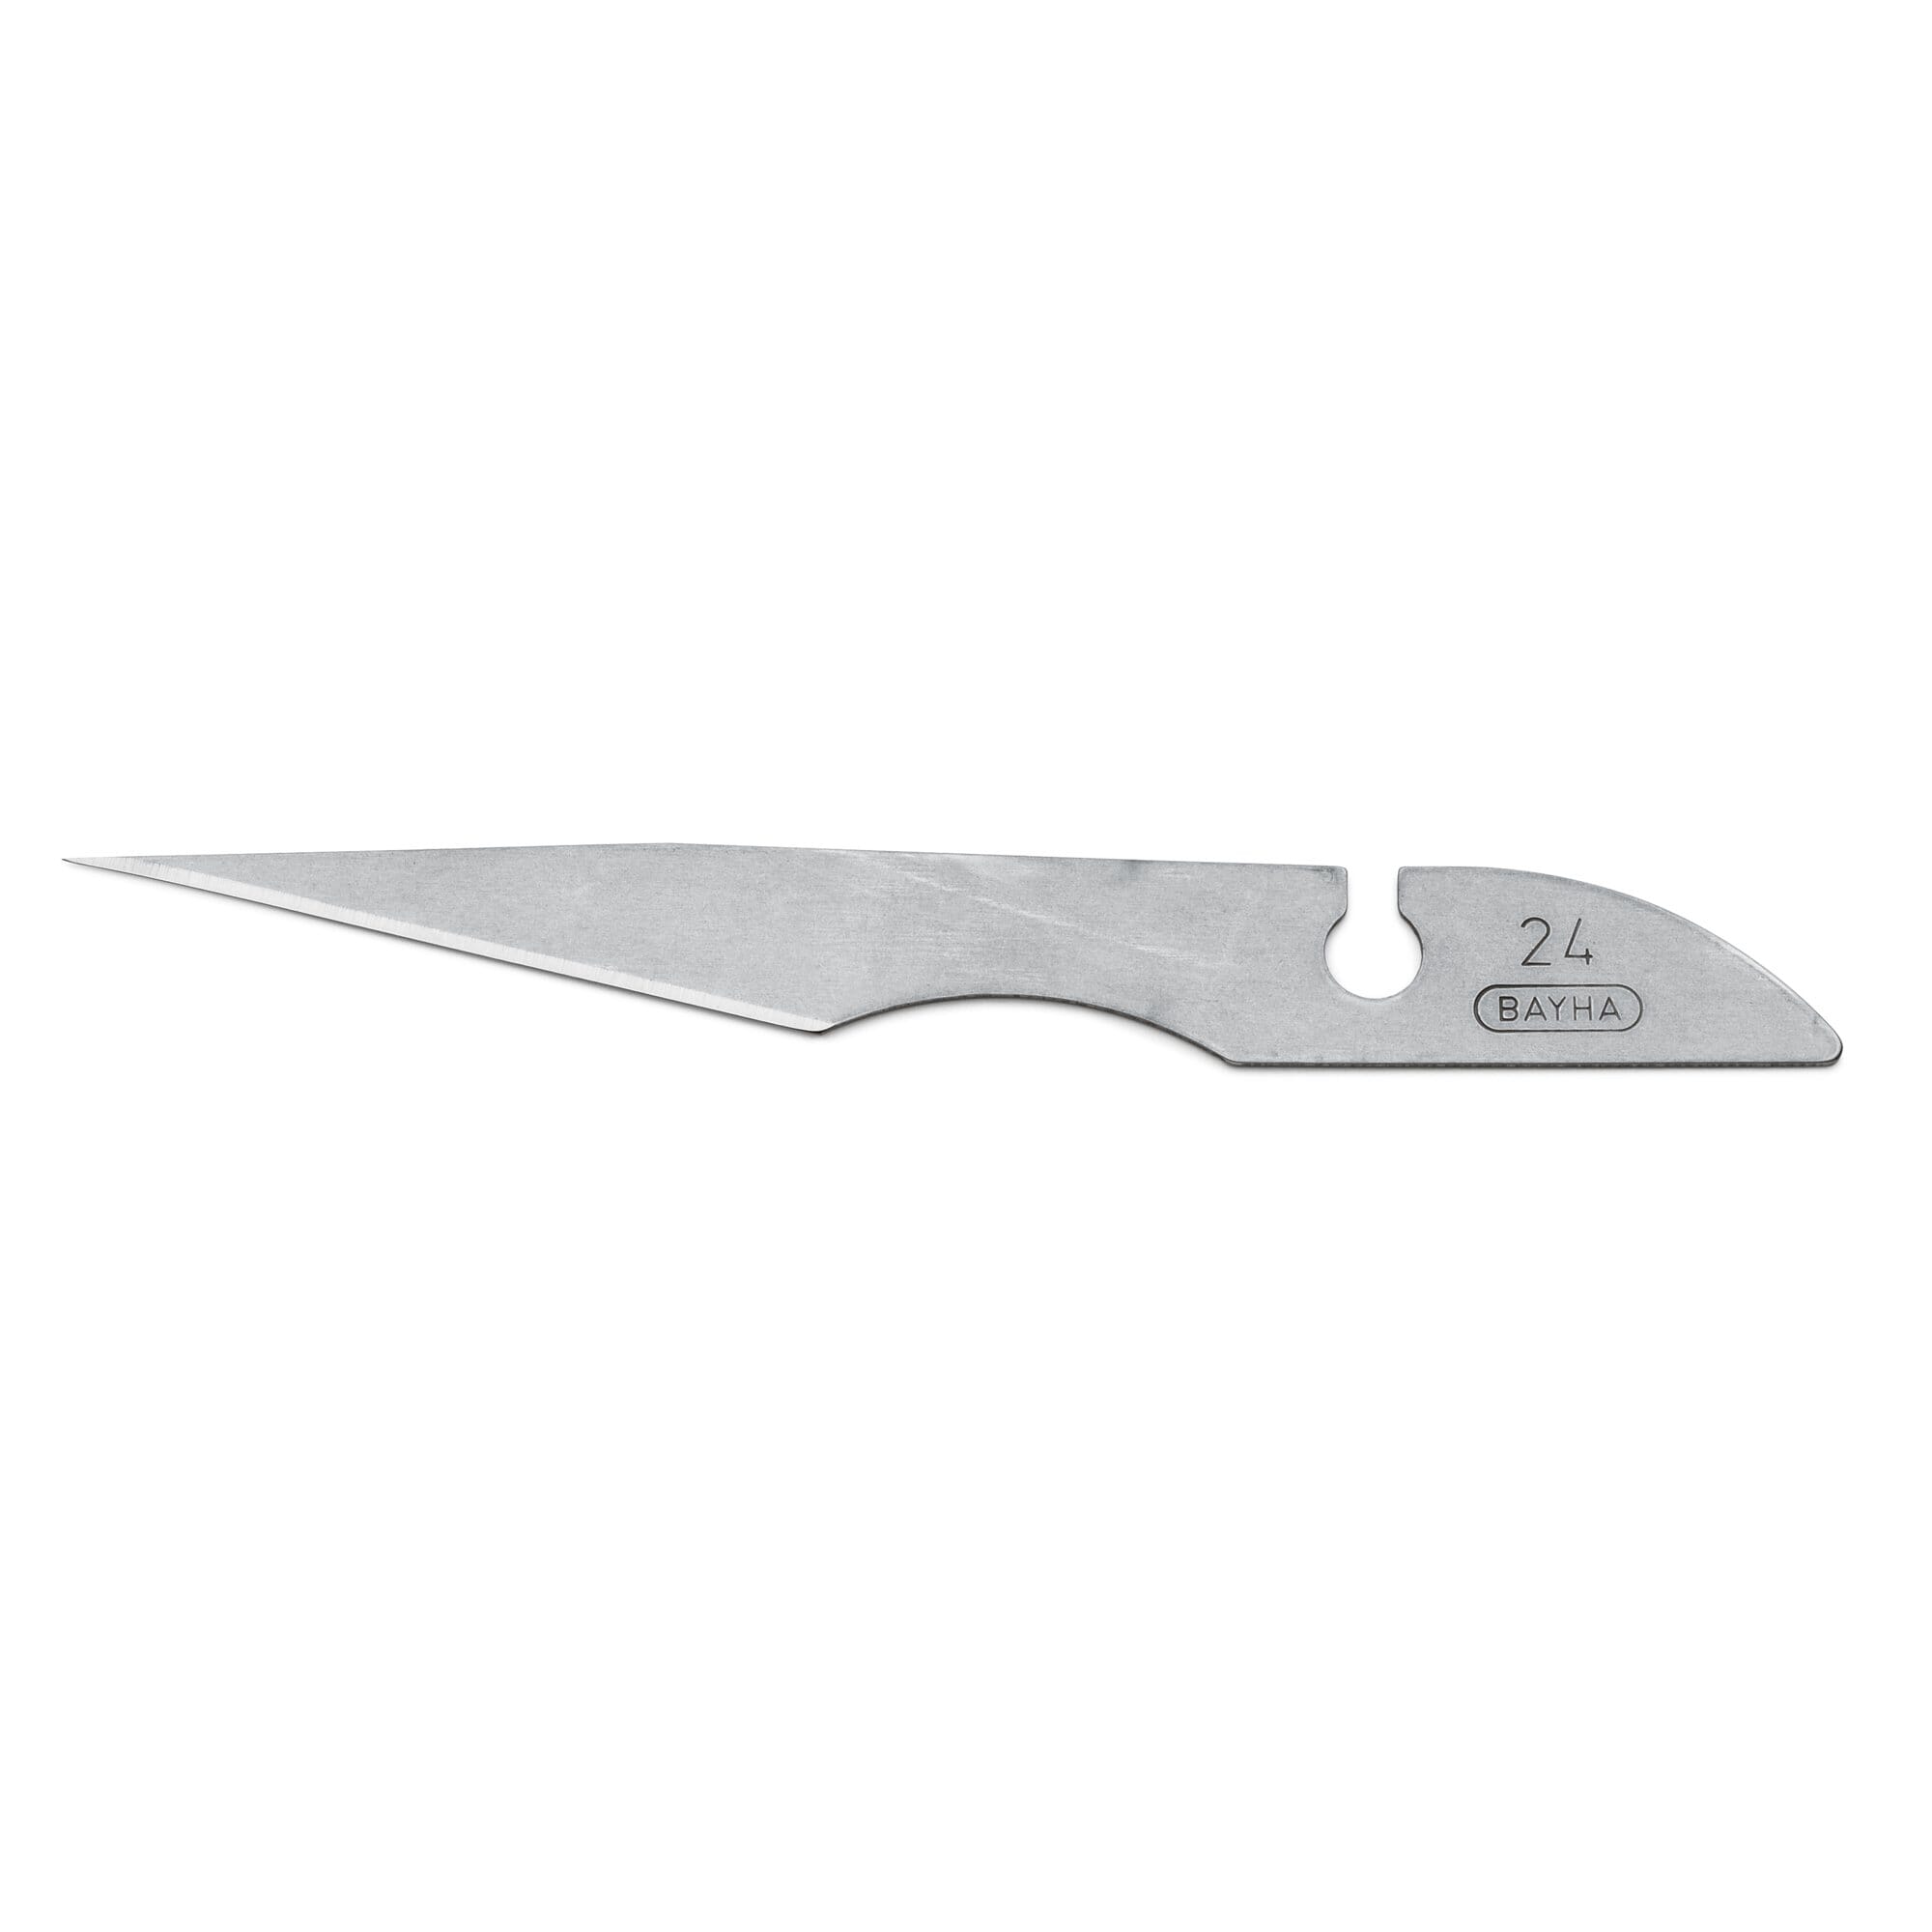 Scalpel blade No. 24 pointed